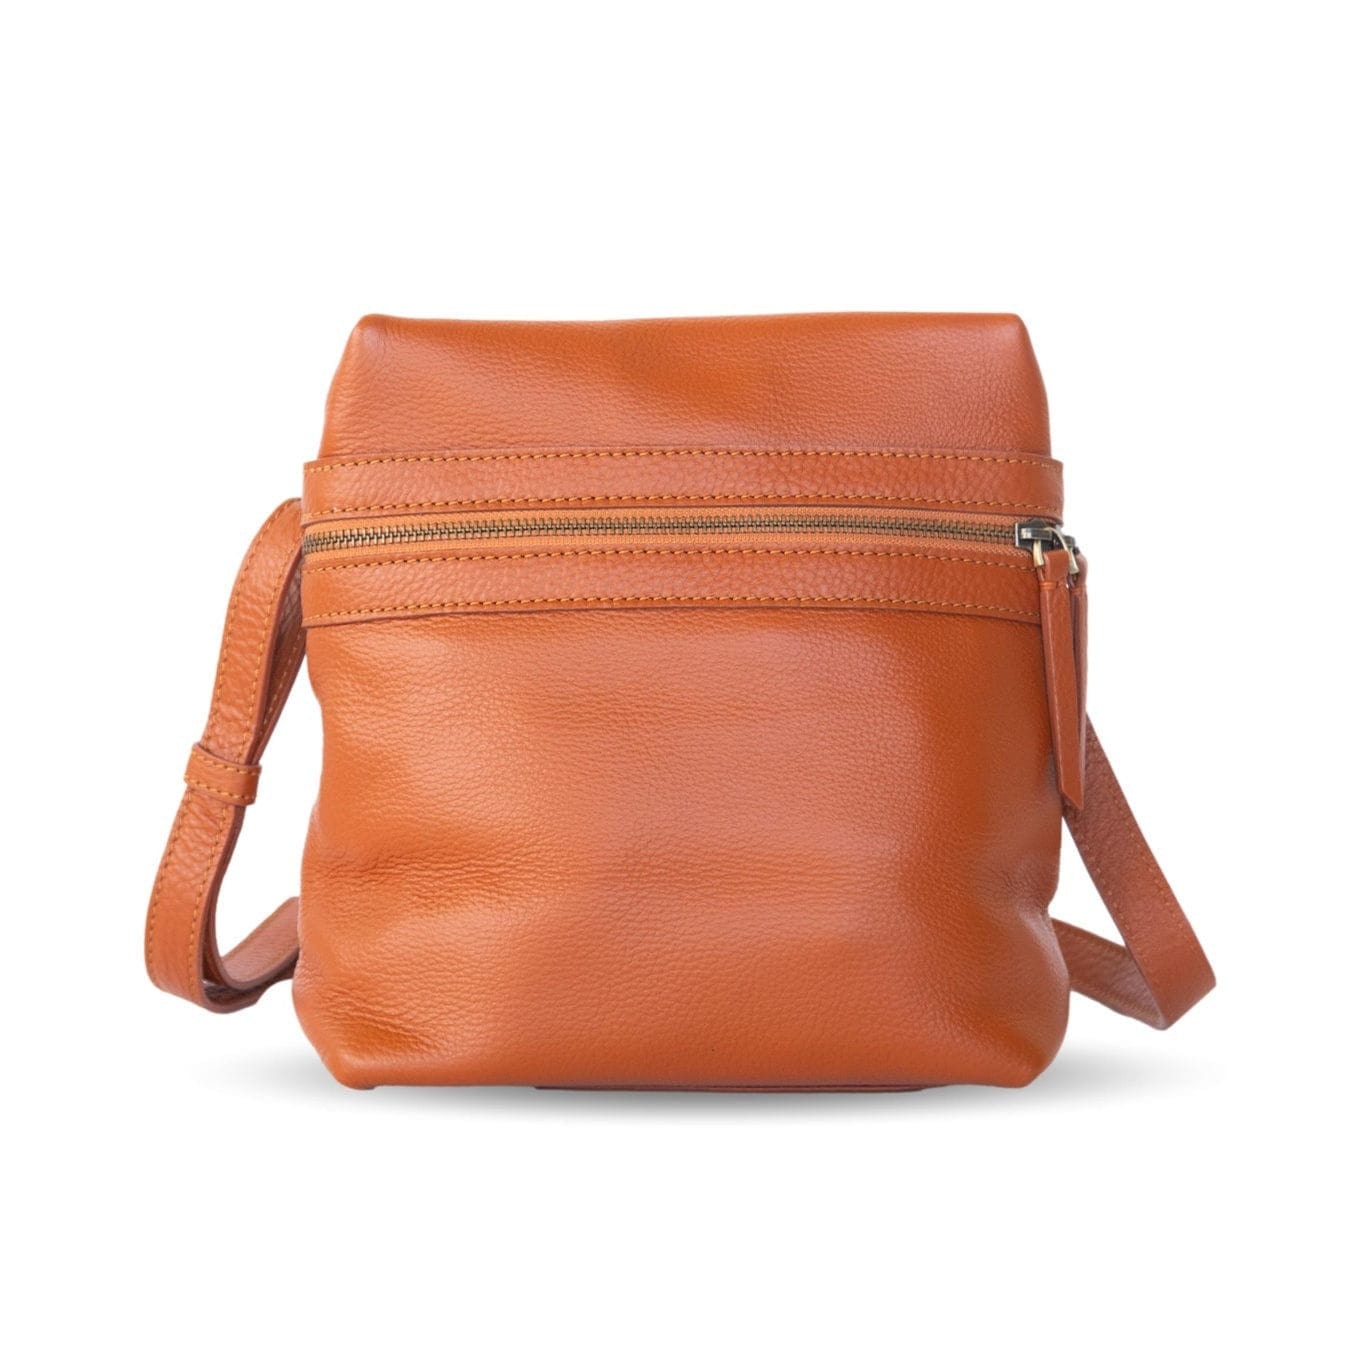 MARGOT genuine LEATHER Crossbody Brown bag purse ZIP TOP front pocket 50  strap